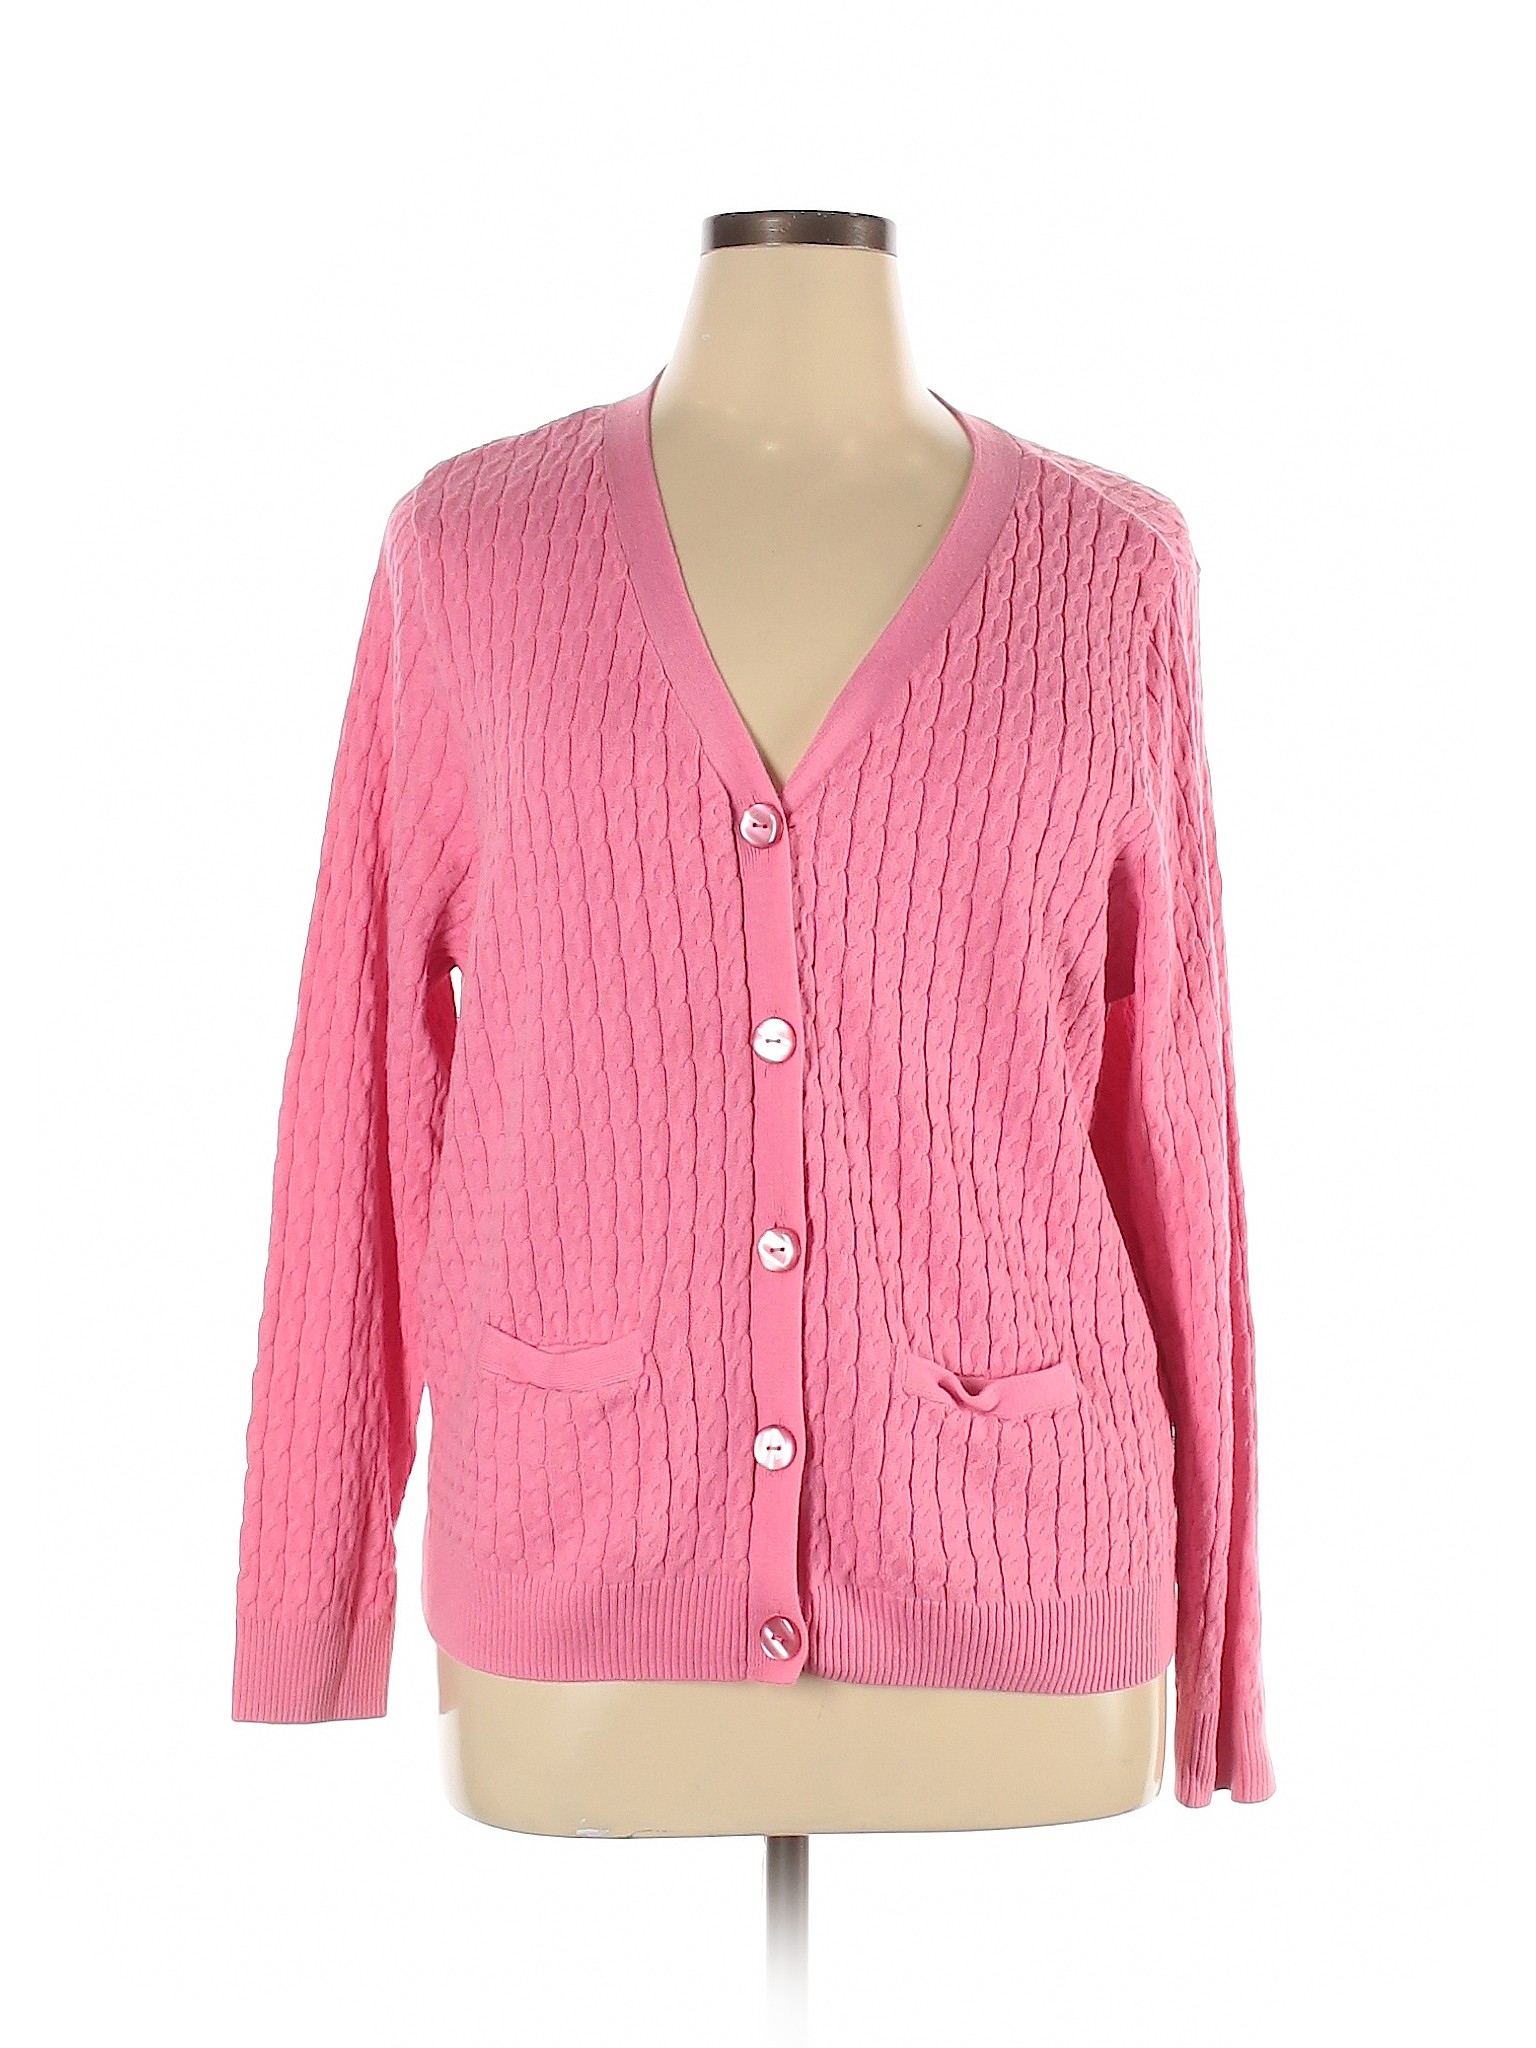 Appleseeds Women Pink Cardigan XL | eBay